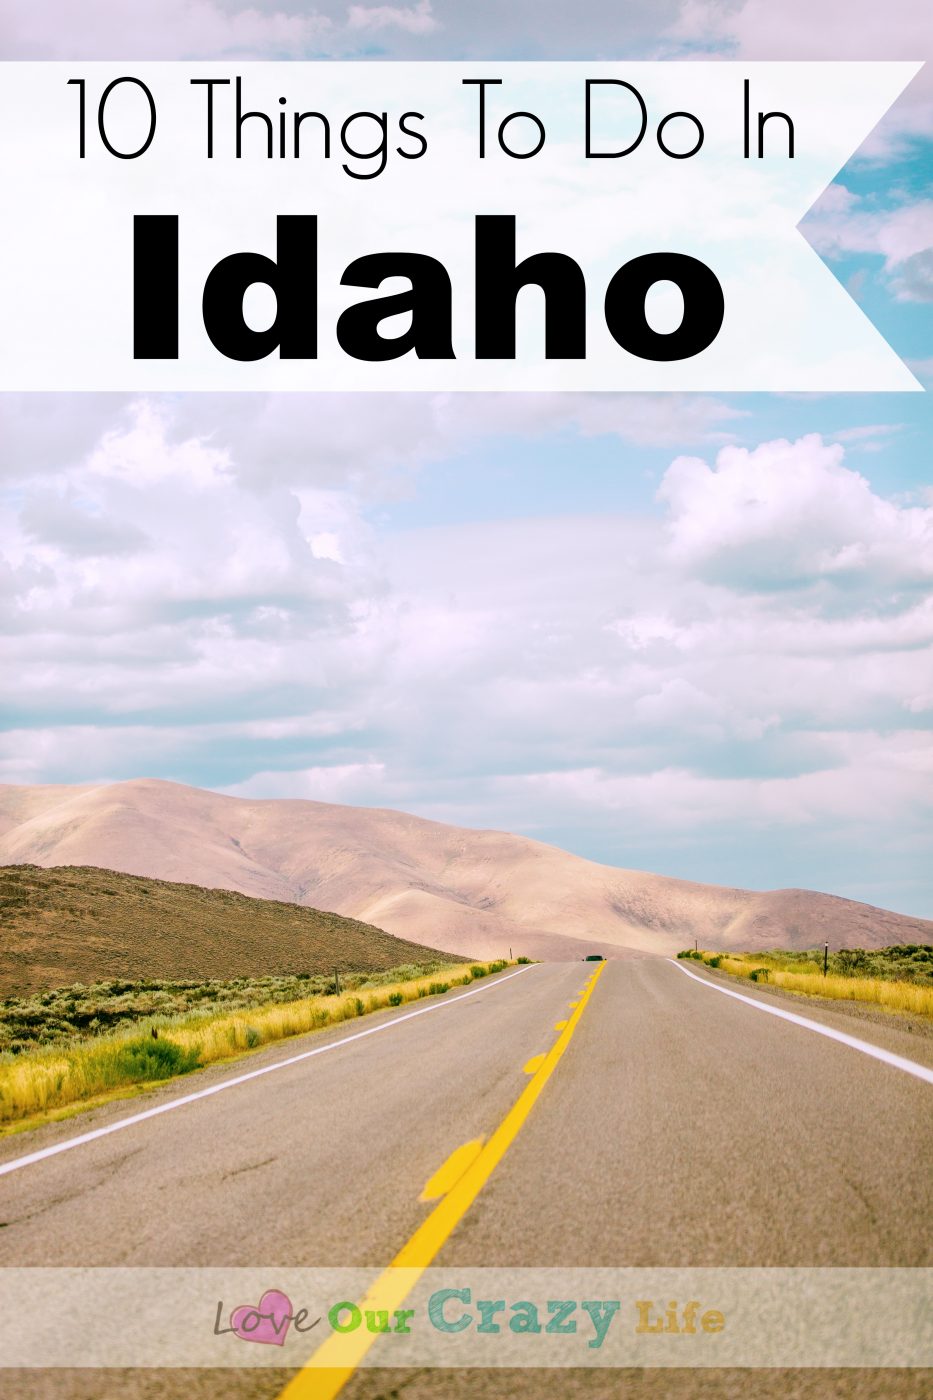 Things to do in Idaho